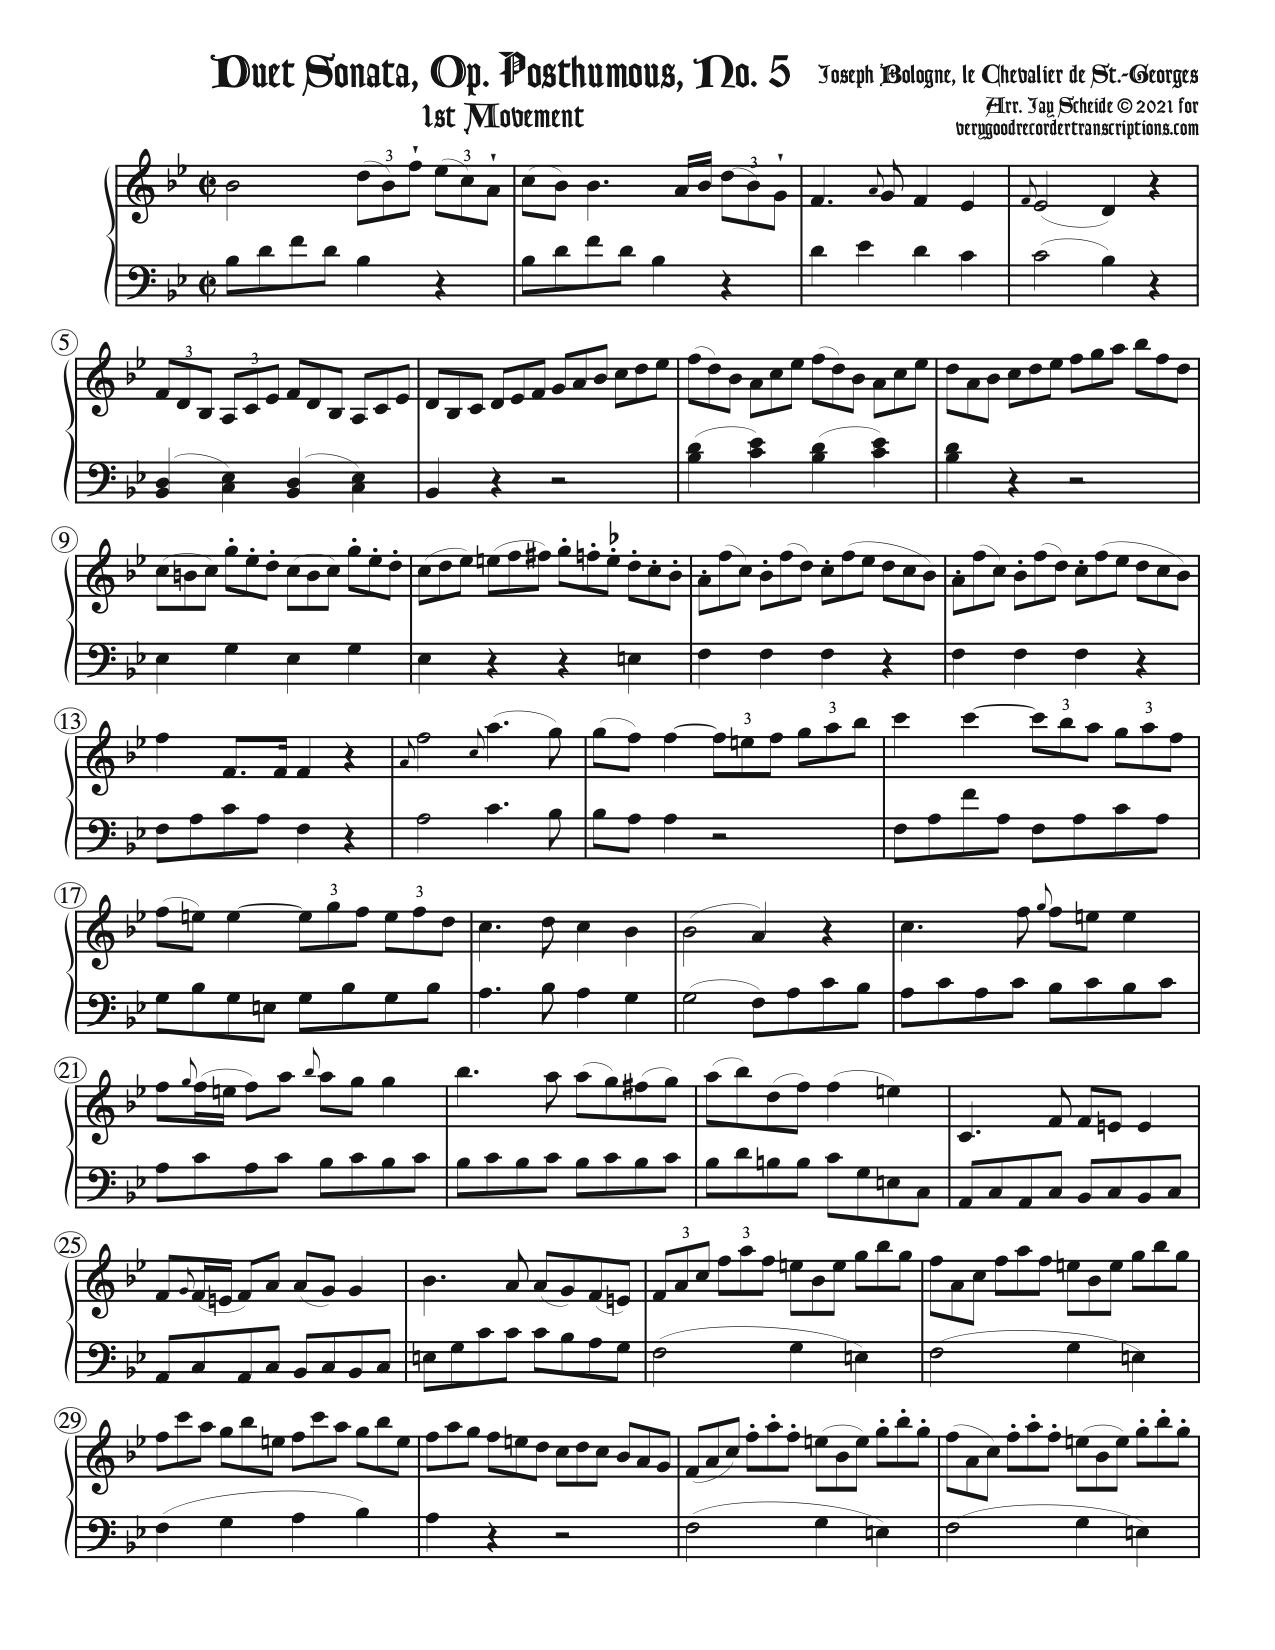 Duet Sonata Op. Posthumous No. 5